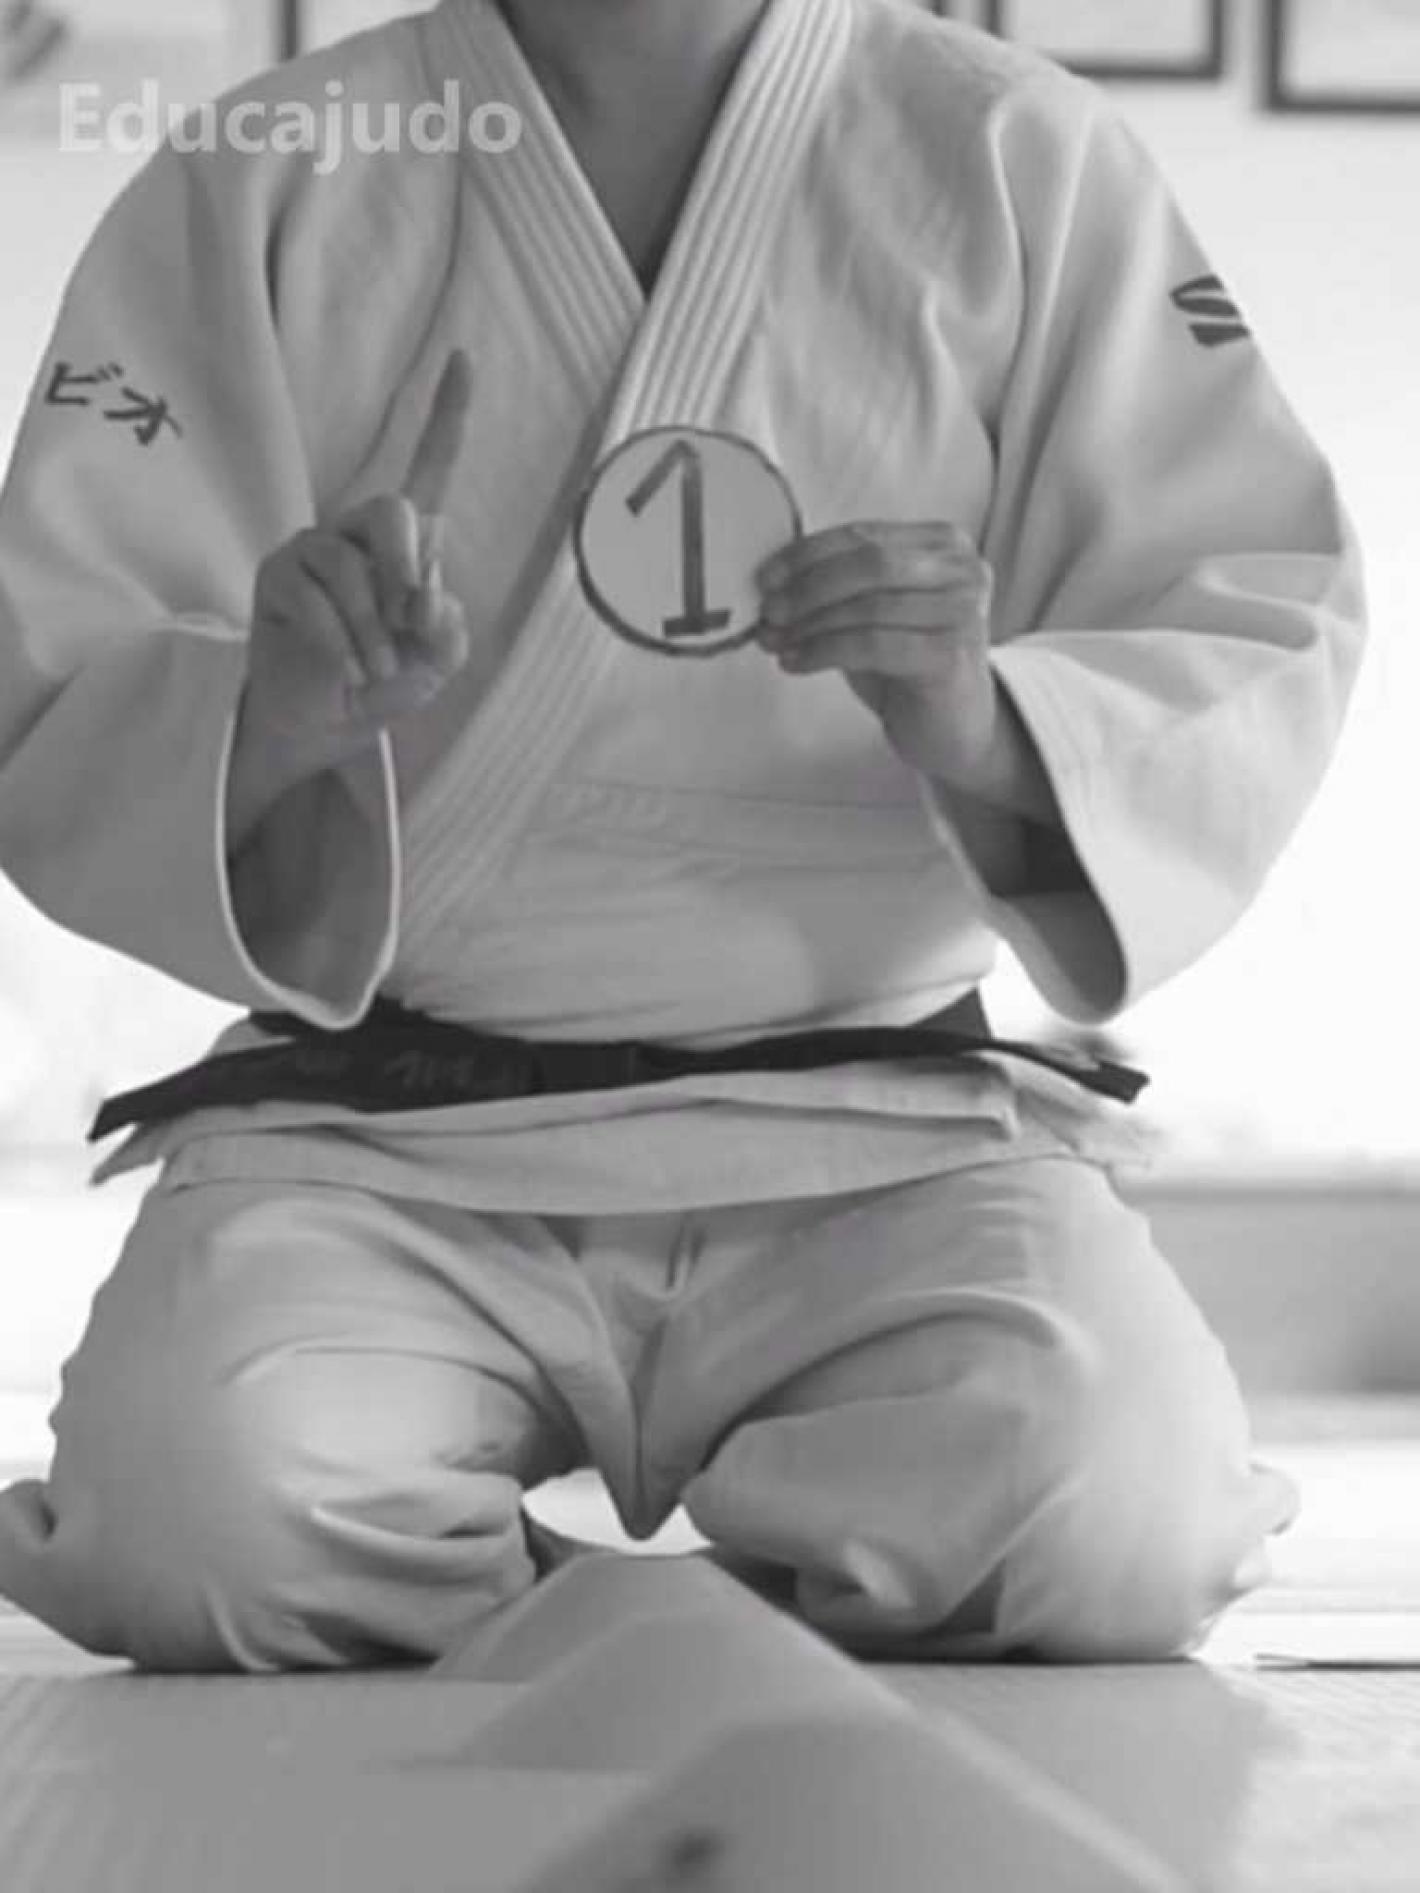 images/campania/campania2023/judo/febbraio/educajudo1/medium/fab.jpg